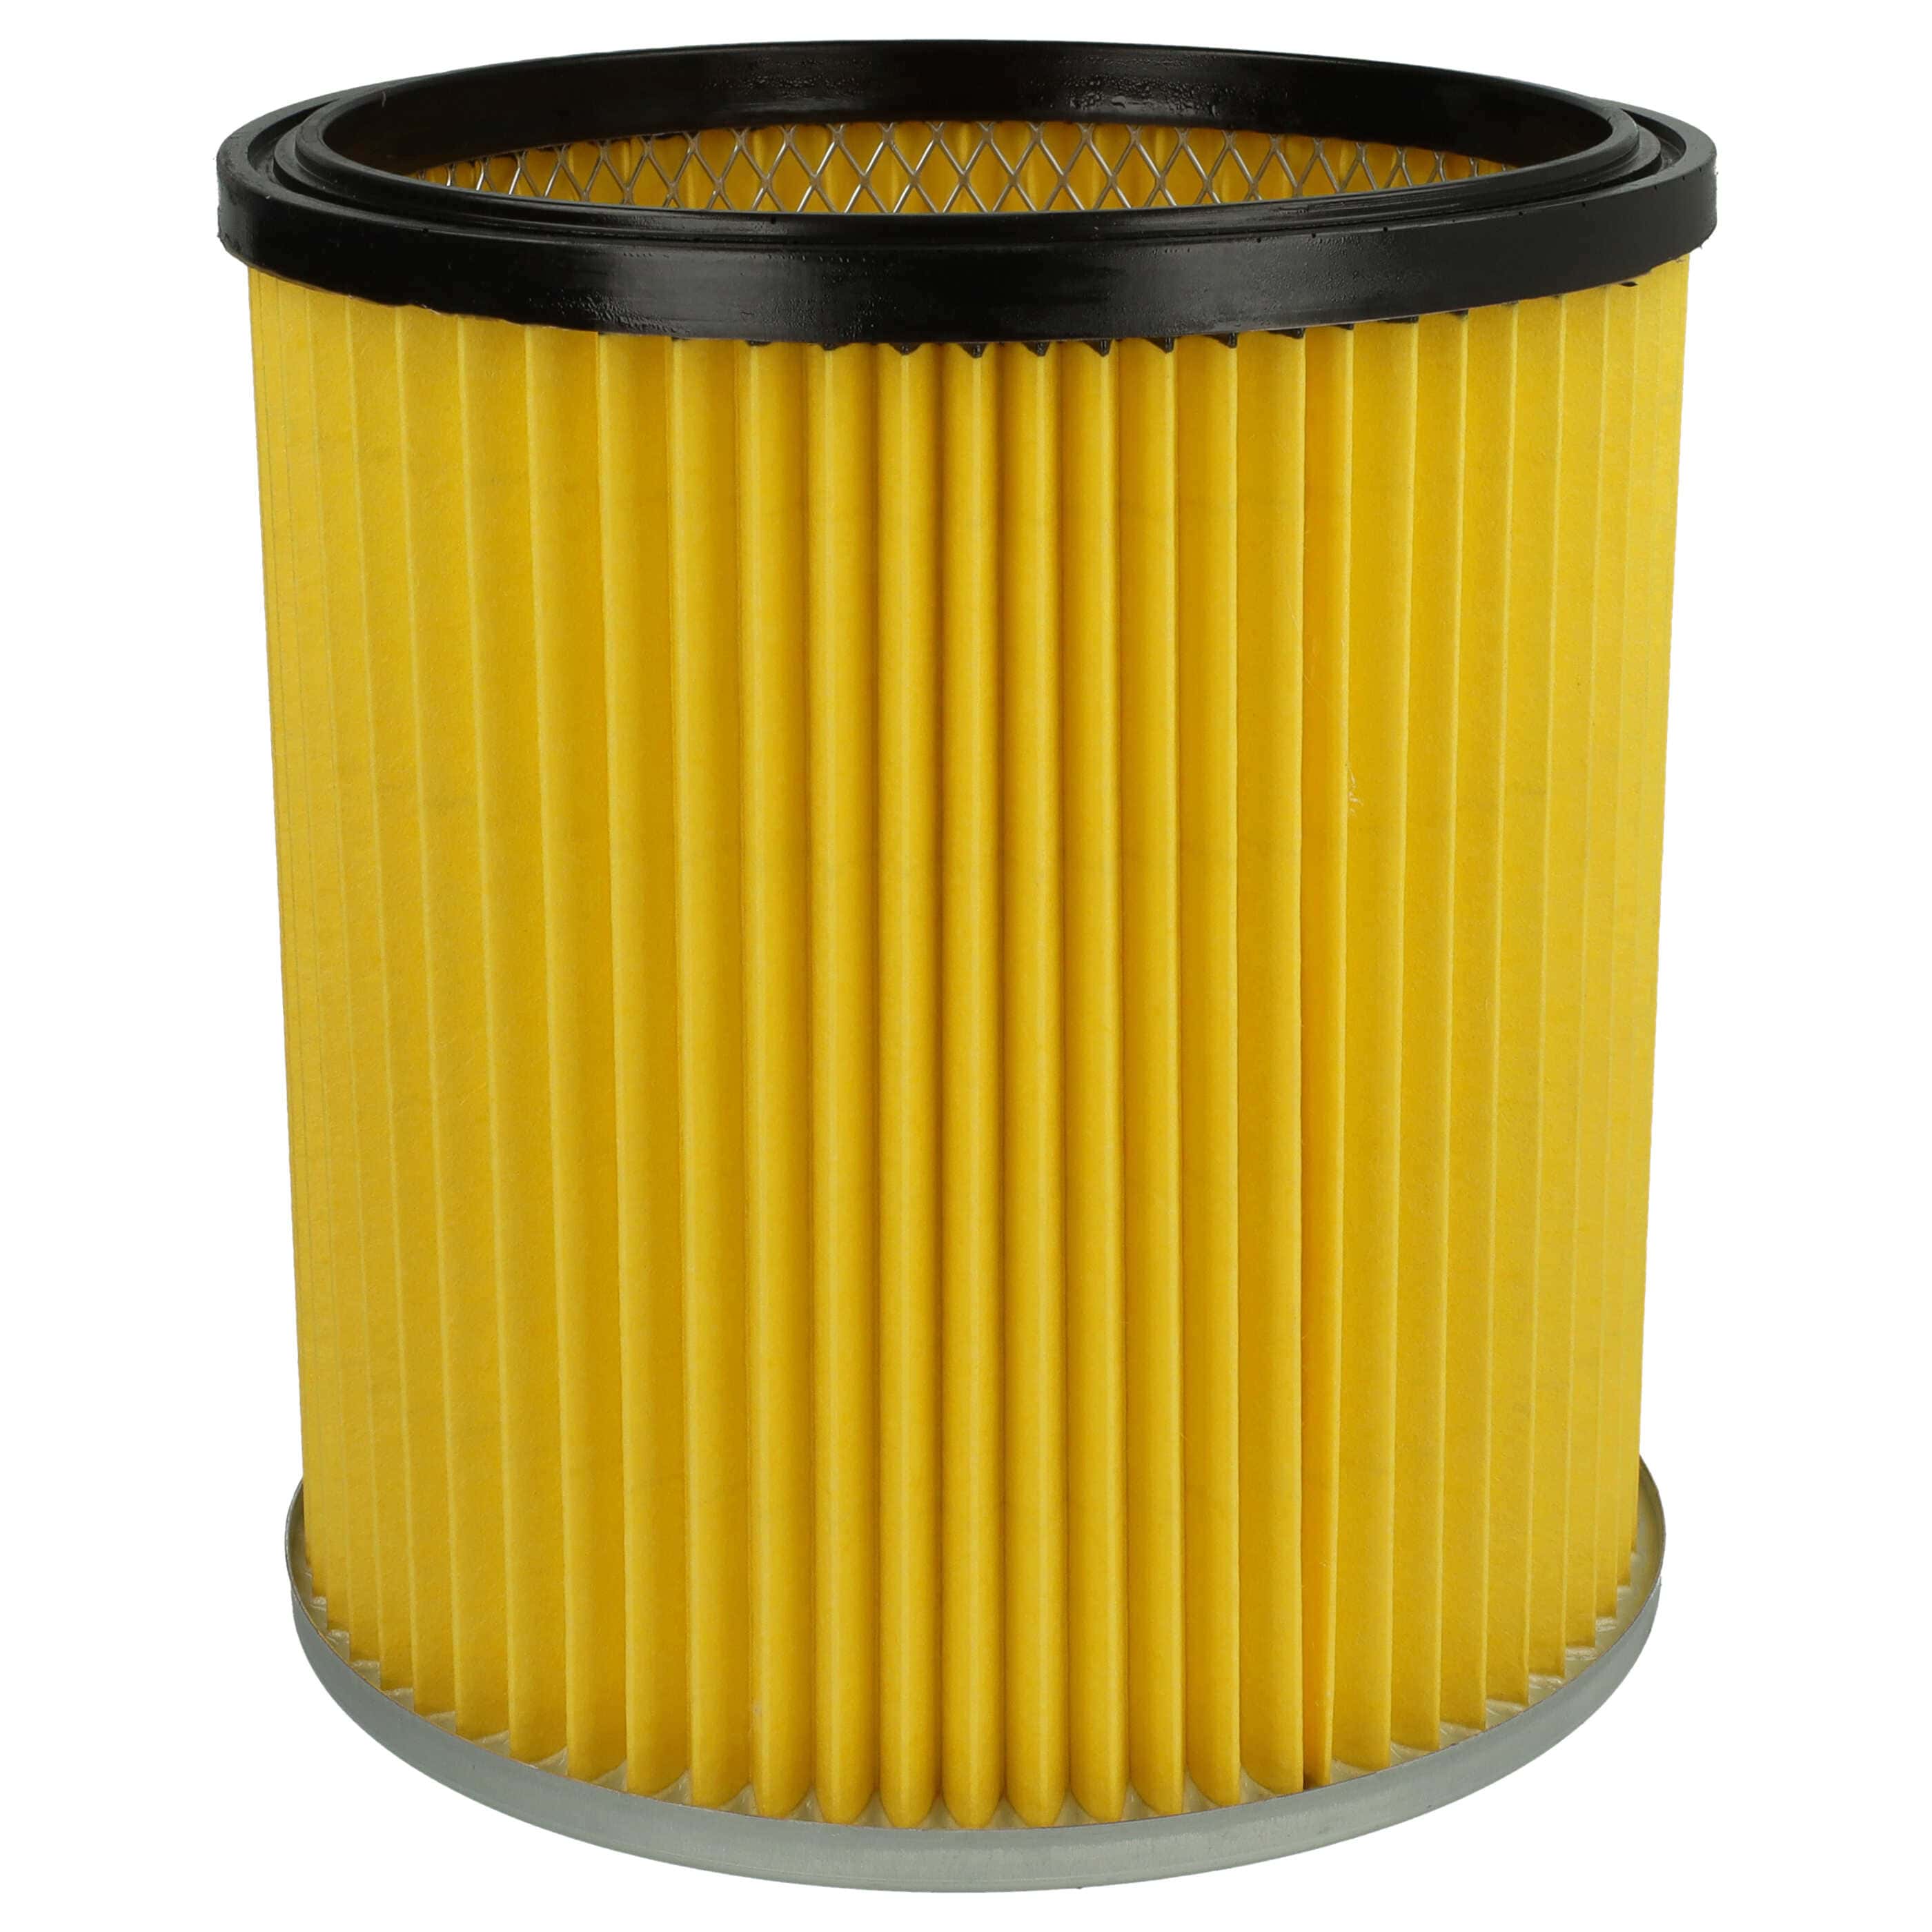 Filtro reemplaza Kärcher 6.414-354.0, 6.414-335.0 para aspiradora - filtro de cartucho, amarillo